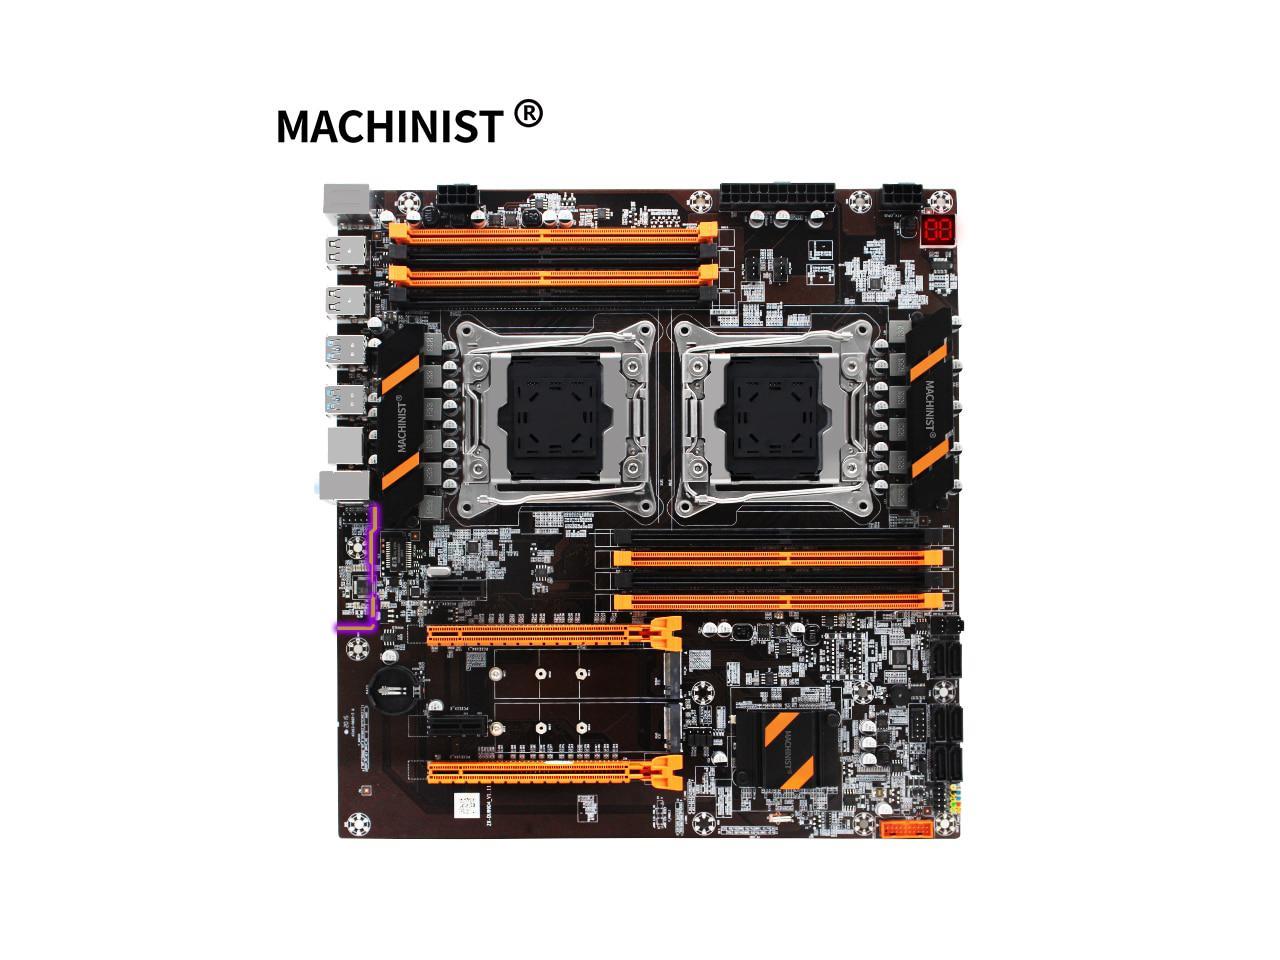 MACHINIST X99 dual CPU motherboard LGA 